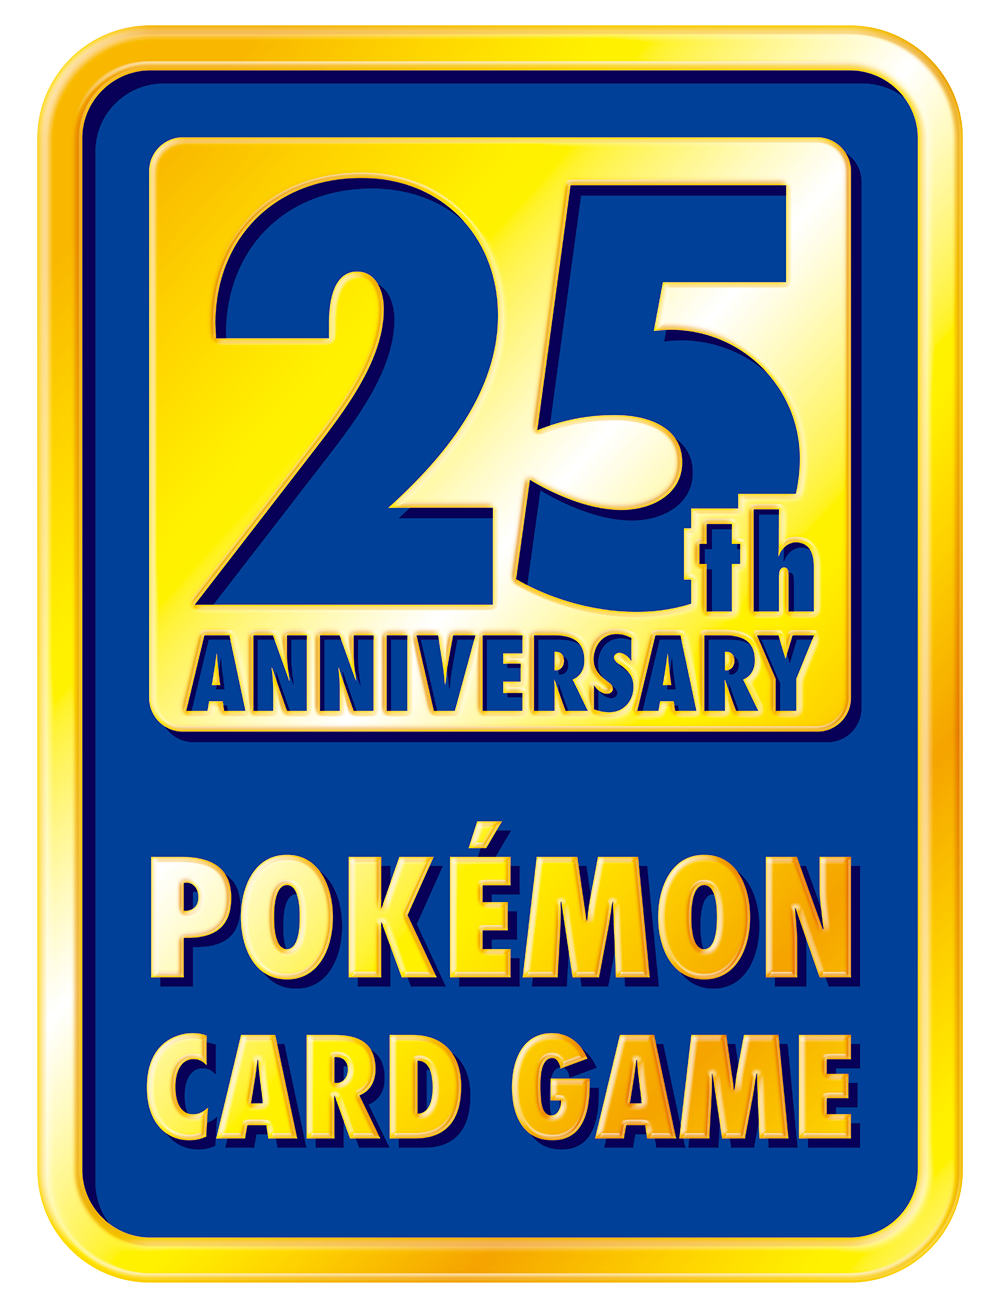 25th ANNIVERSARY POKEMON CARD GAME